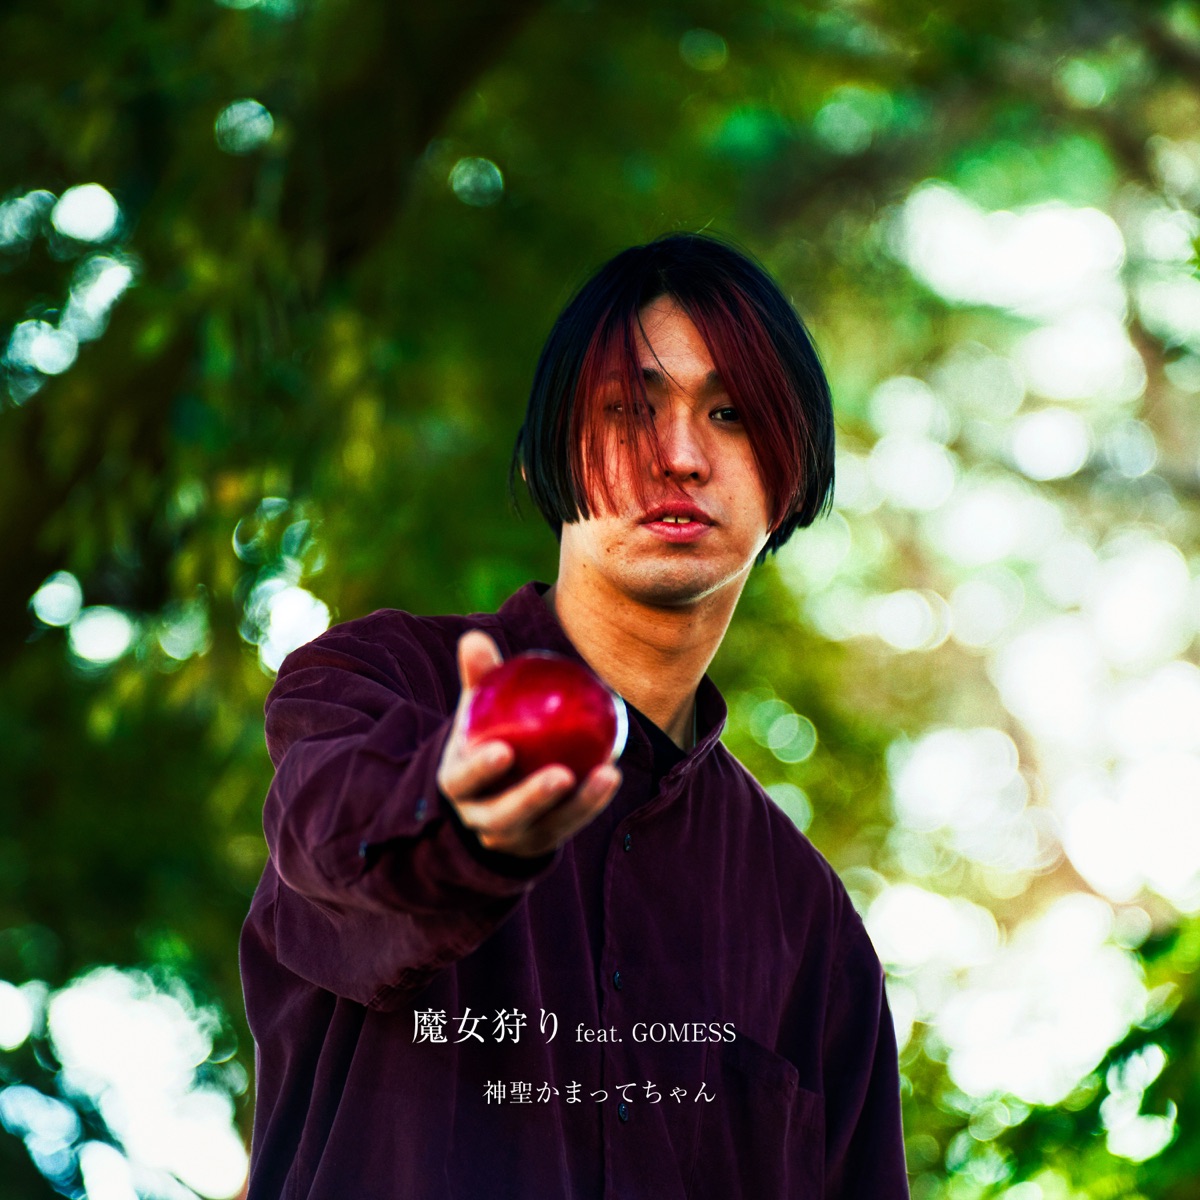 Cover art for『Shinsei Kamattechan - Majogari (feat. GOMESS)』from the release『Majogari (feat. GOMESS)』